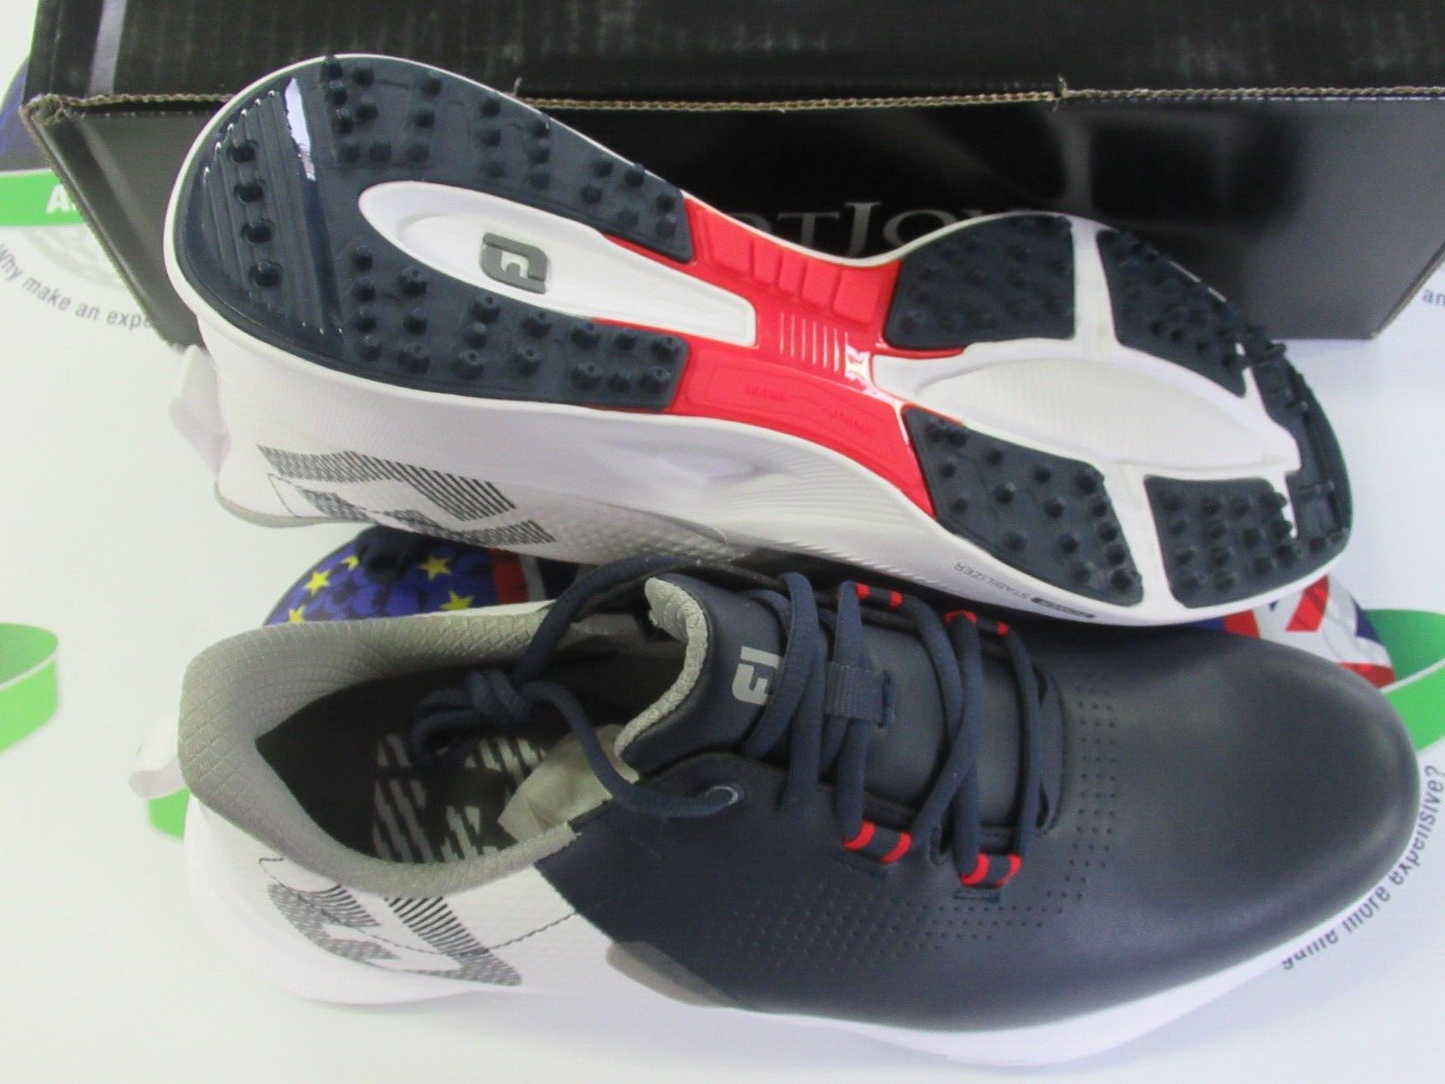 footjoy fj fuel waterproof golf shoes 55442k navy/white uk size 8.5 medium